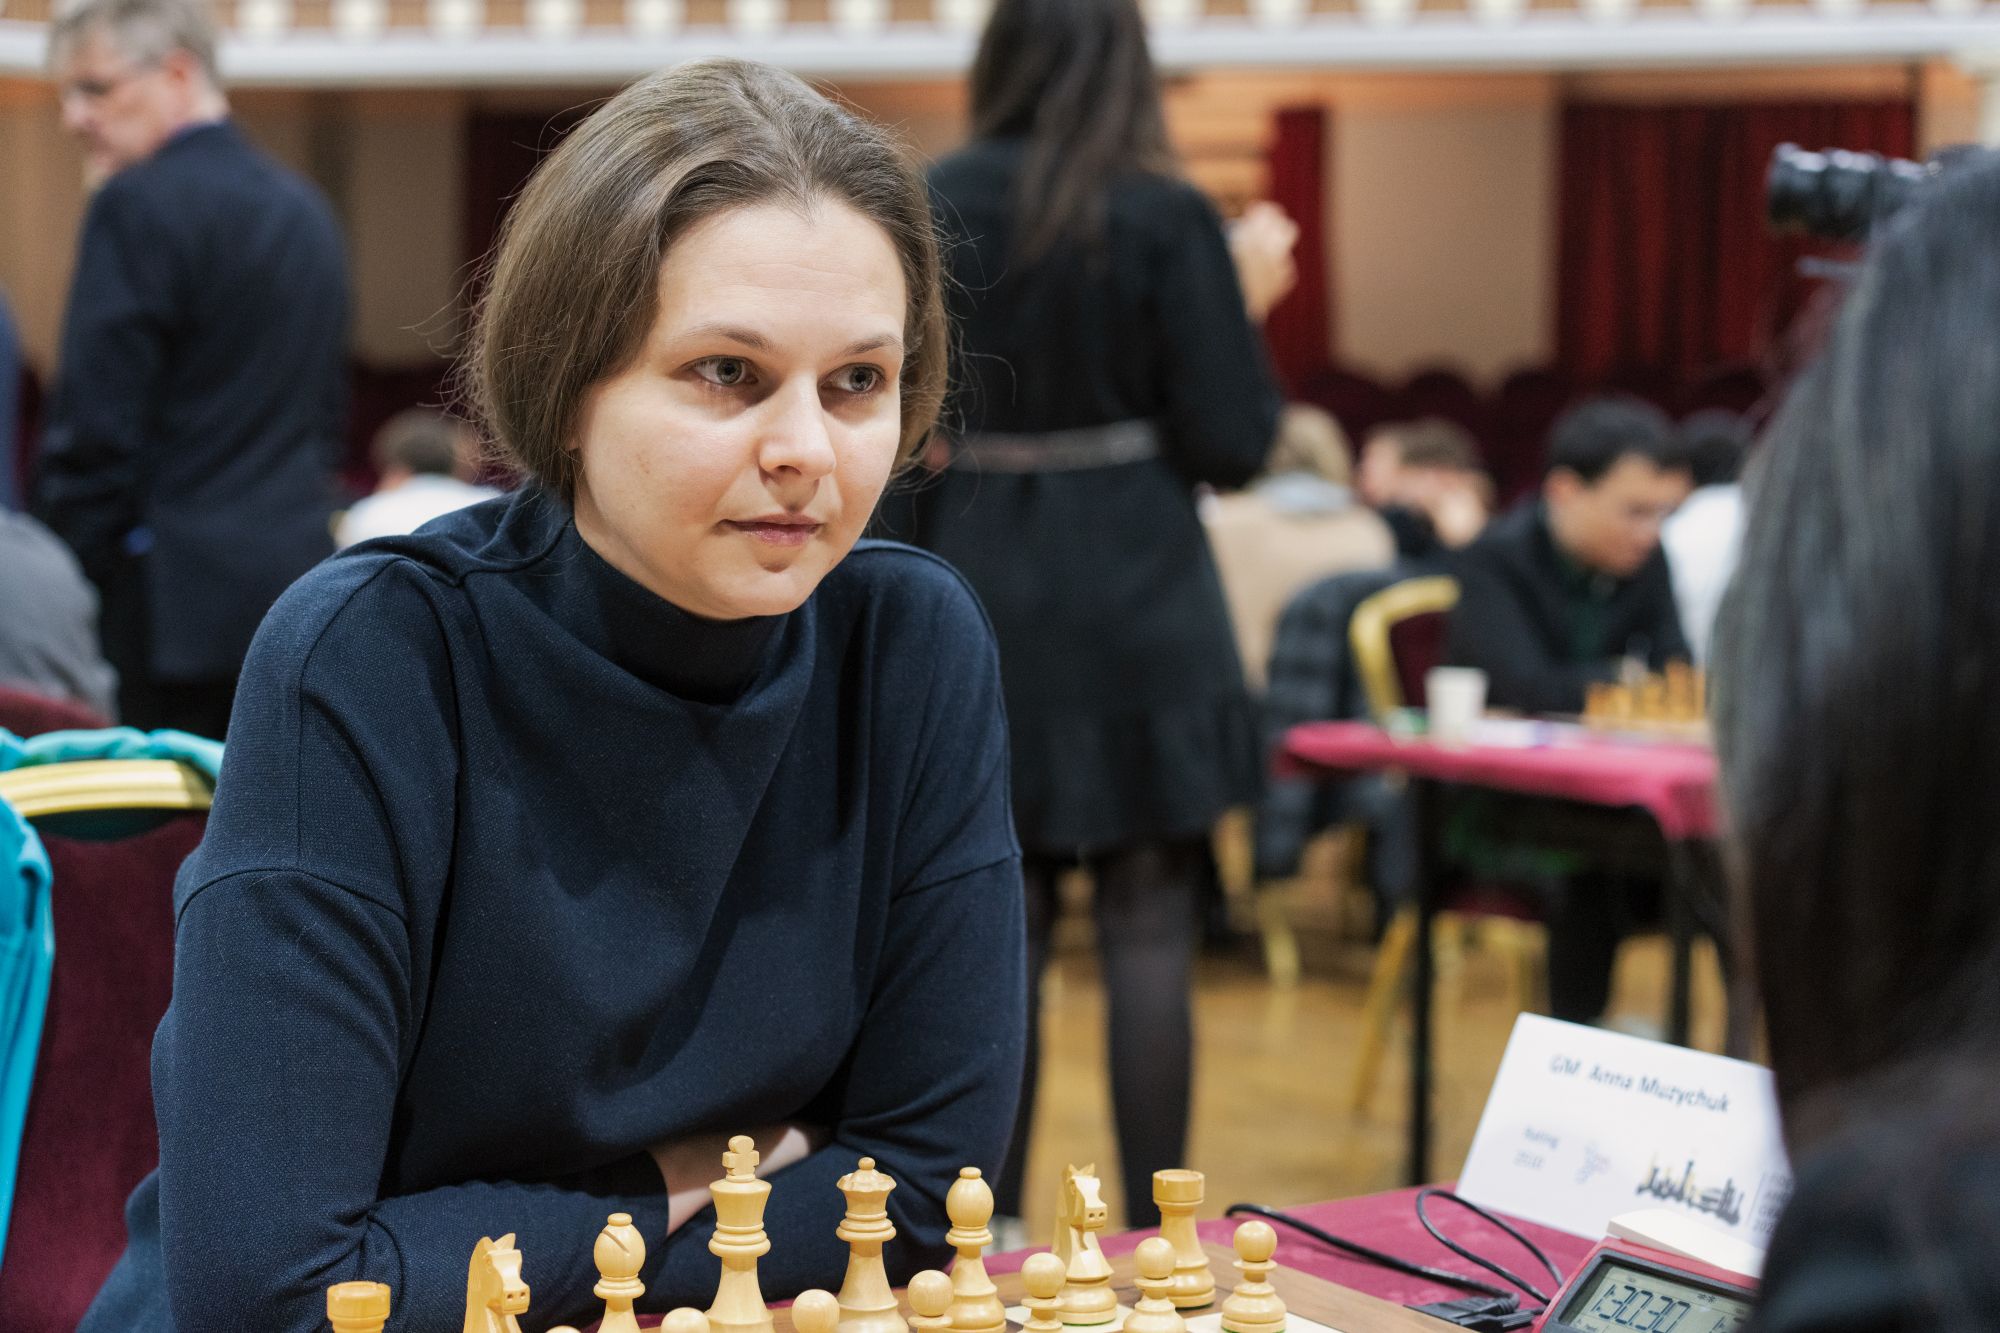 FIDE Grand Swiss 2023: Nakamura Overcomes Caruana, Leads With Esipenko,  Vidit Before Last Round 